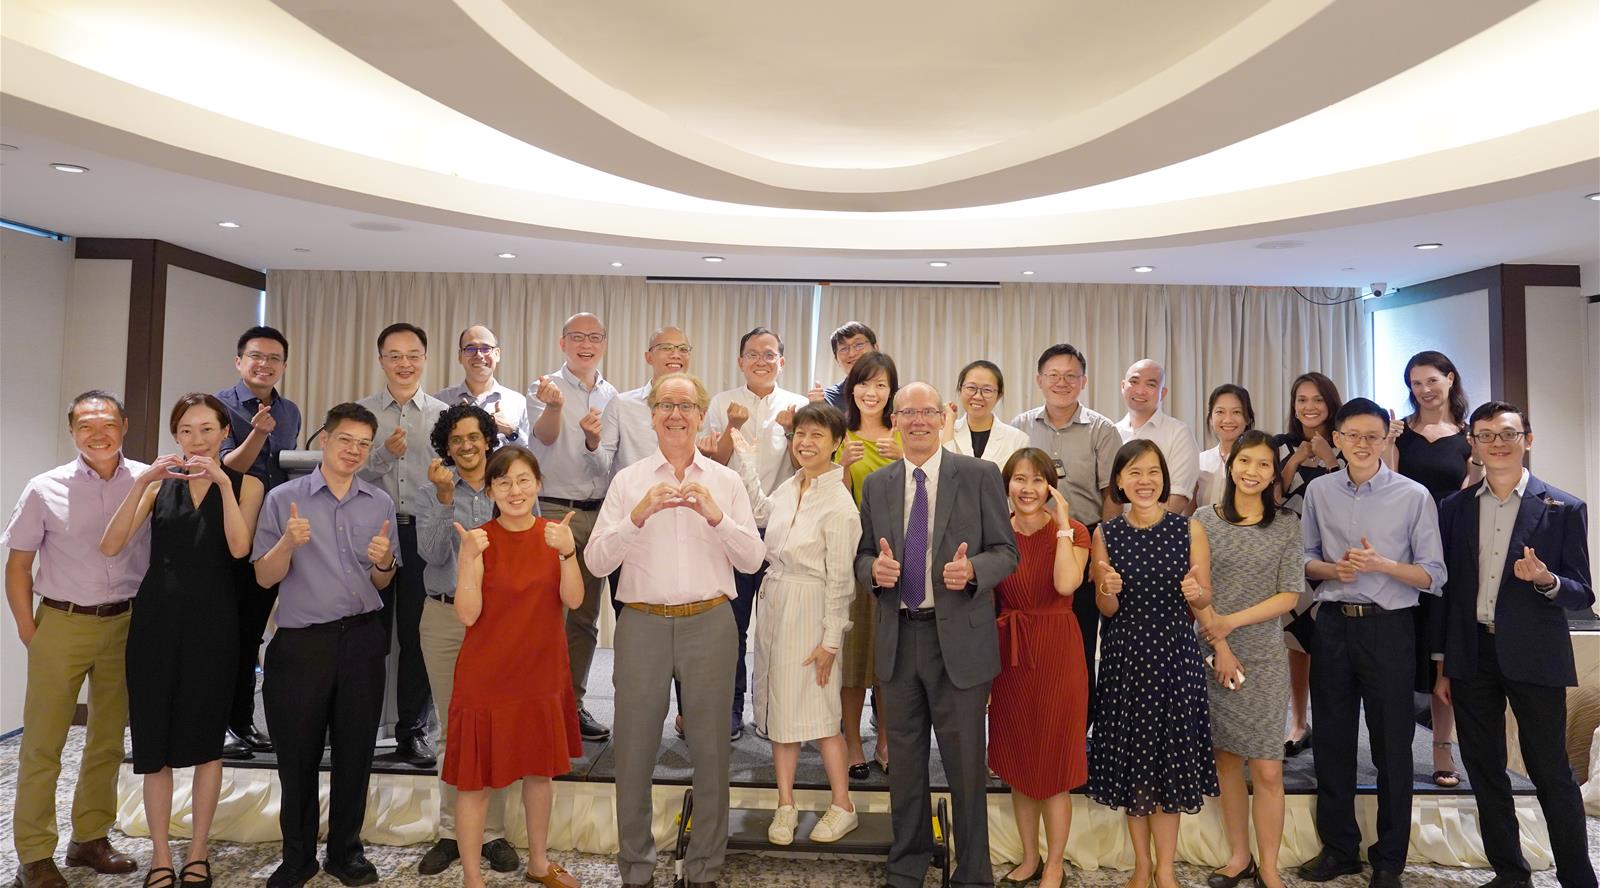 Celebrating collaborative successes in clinician-scientists’ development